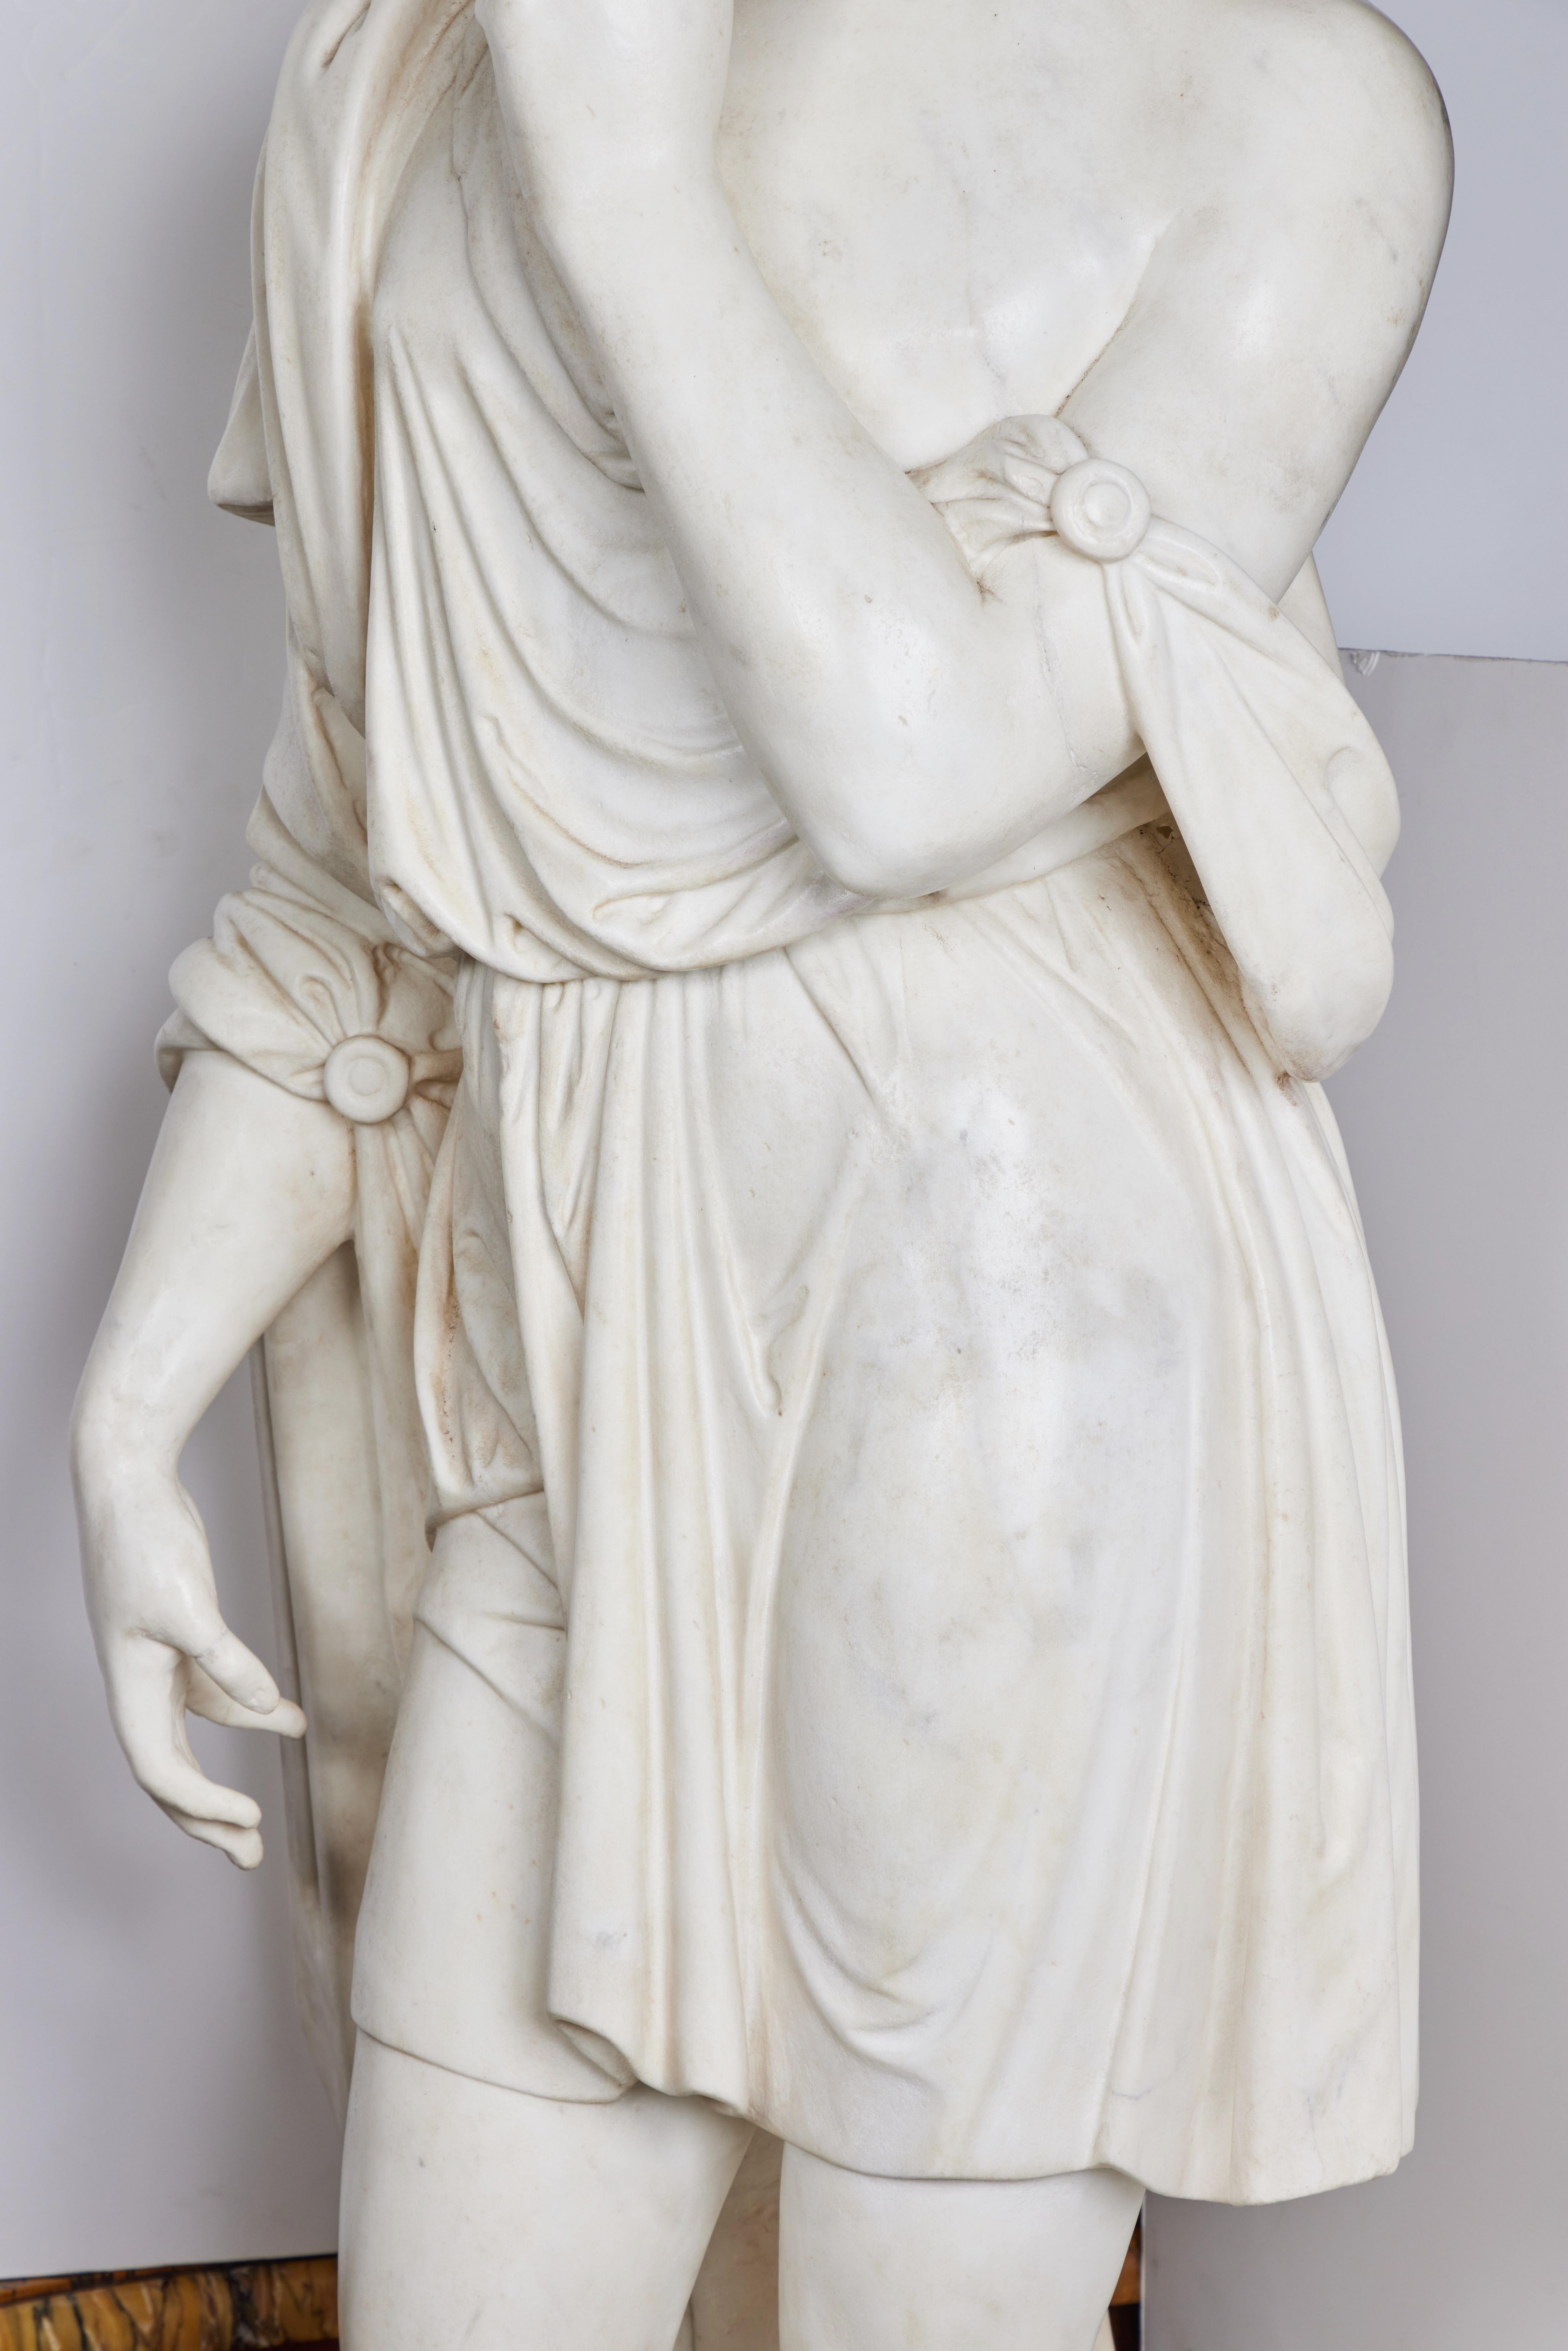 roman marble statues